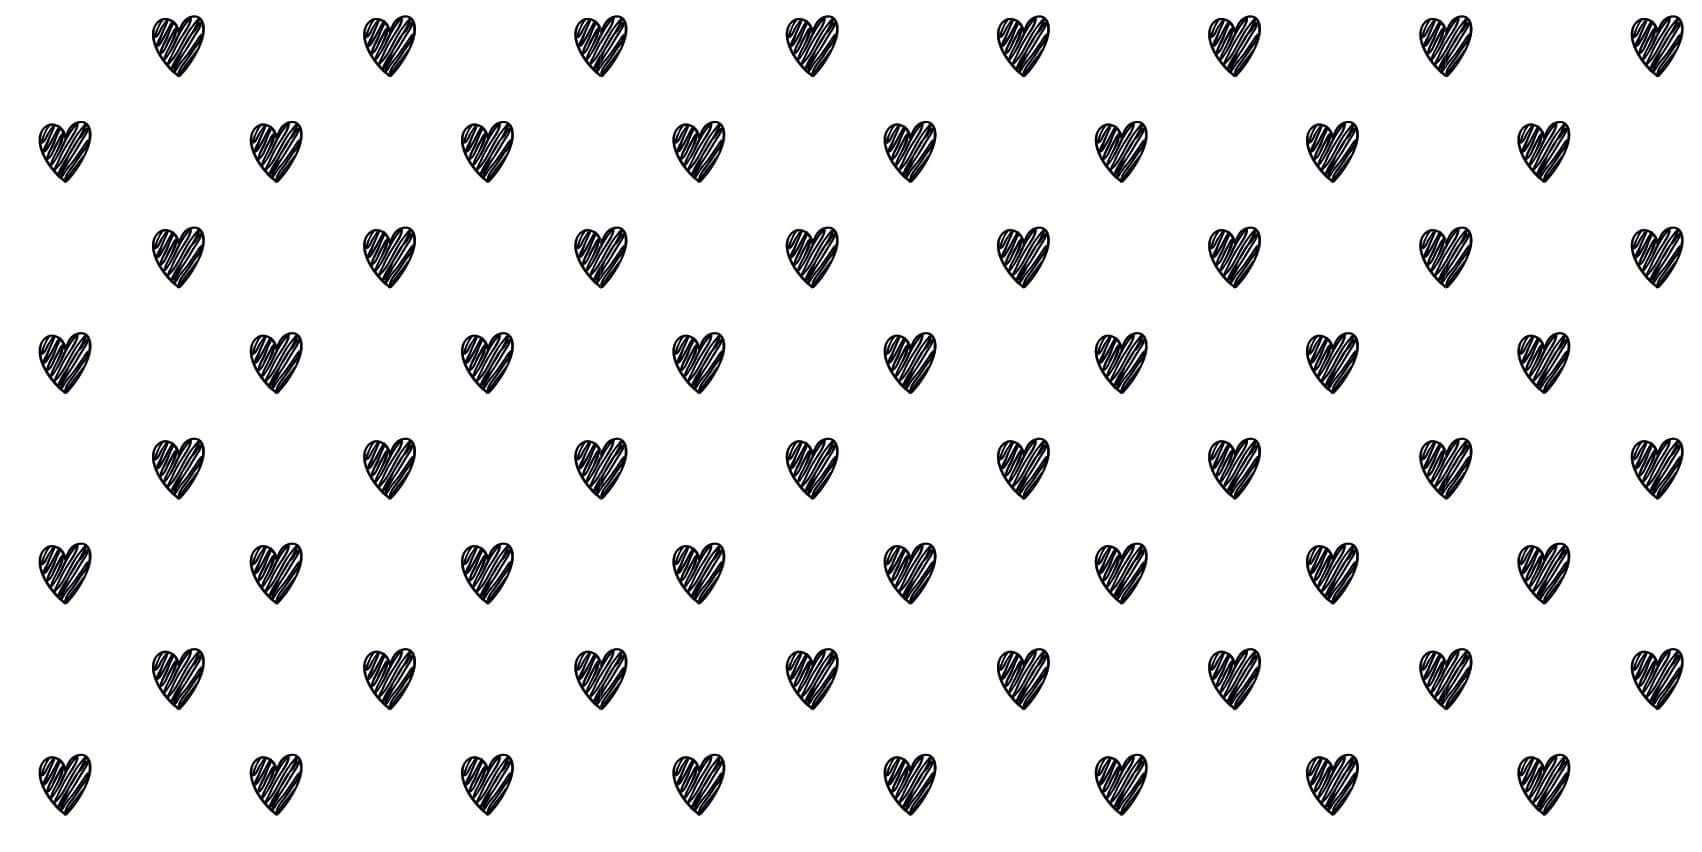 Zwart wit behang - Zwarte getekende hartjes - Kinderkamer